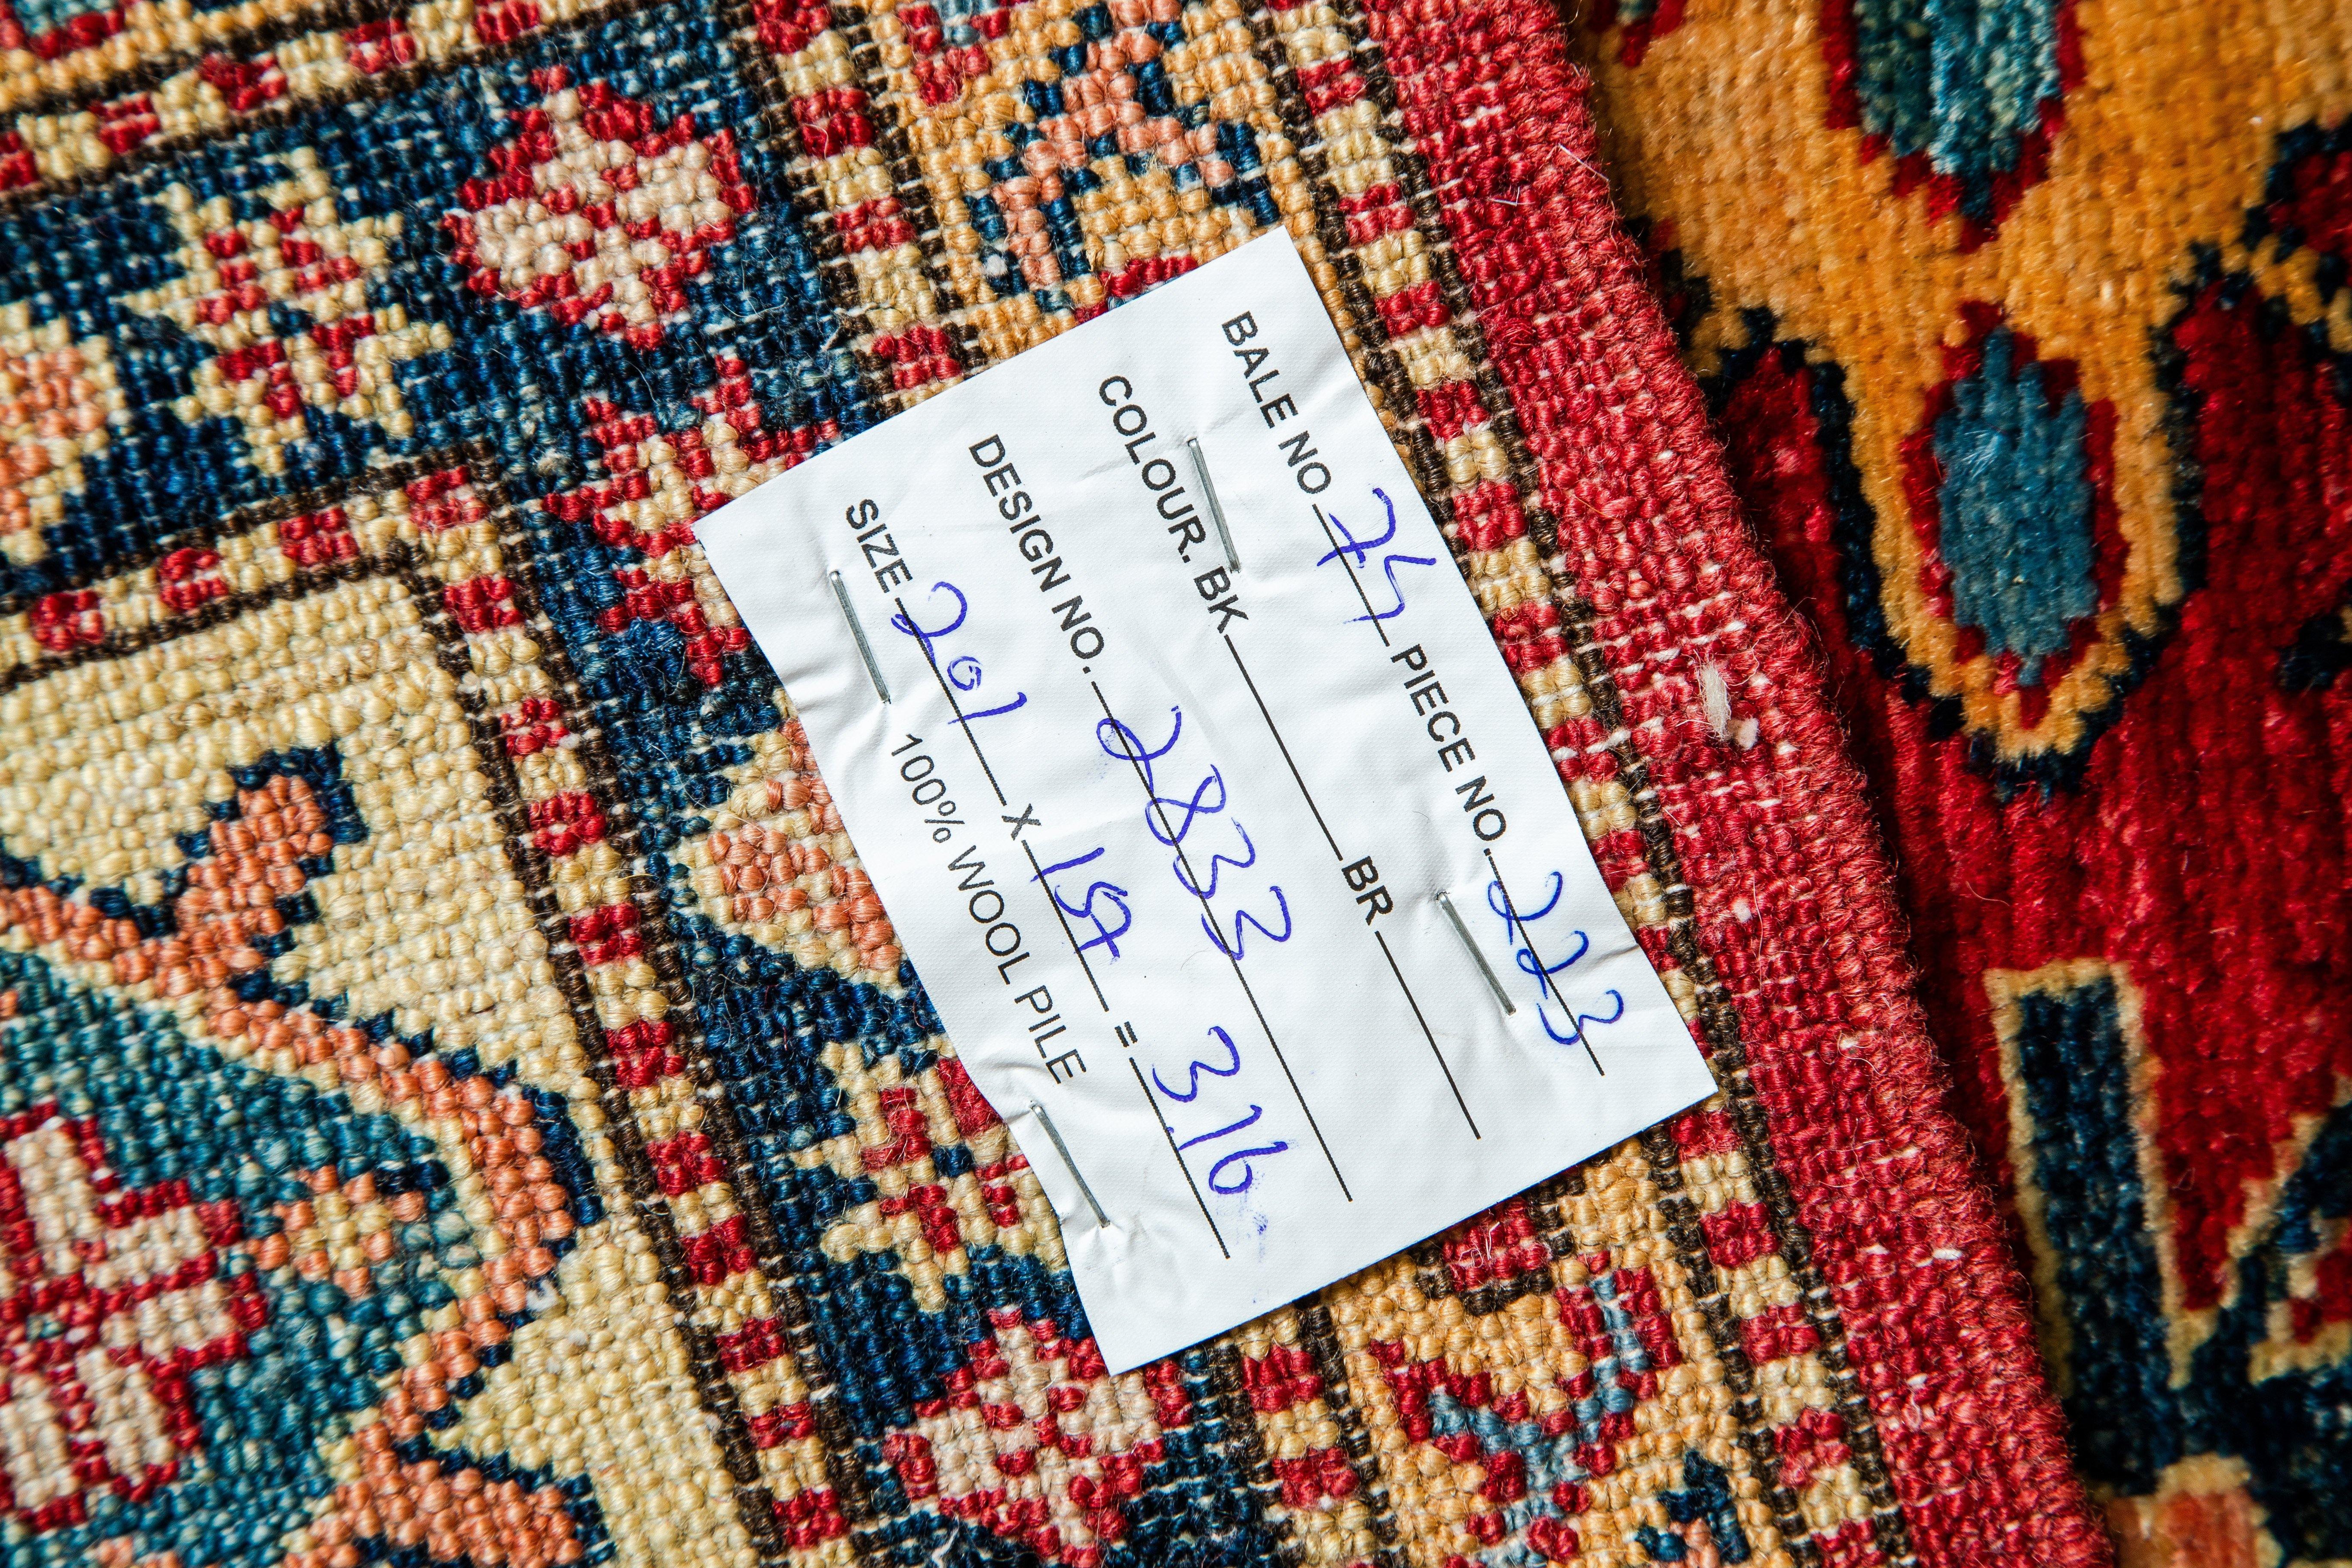 Kazak Supreme 201157 - The Rug Loft rugs ireland